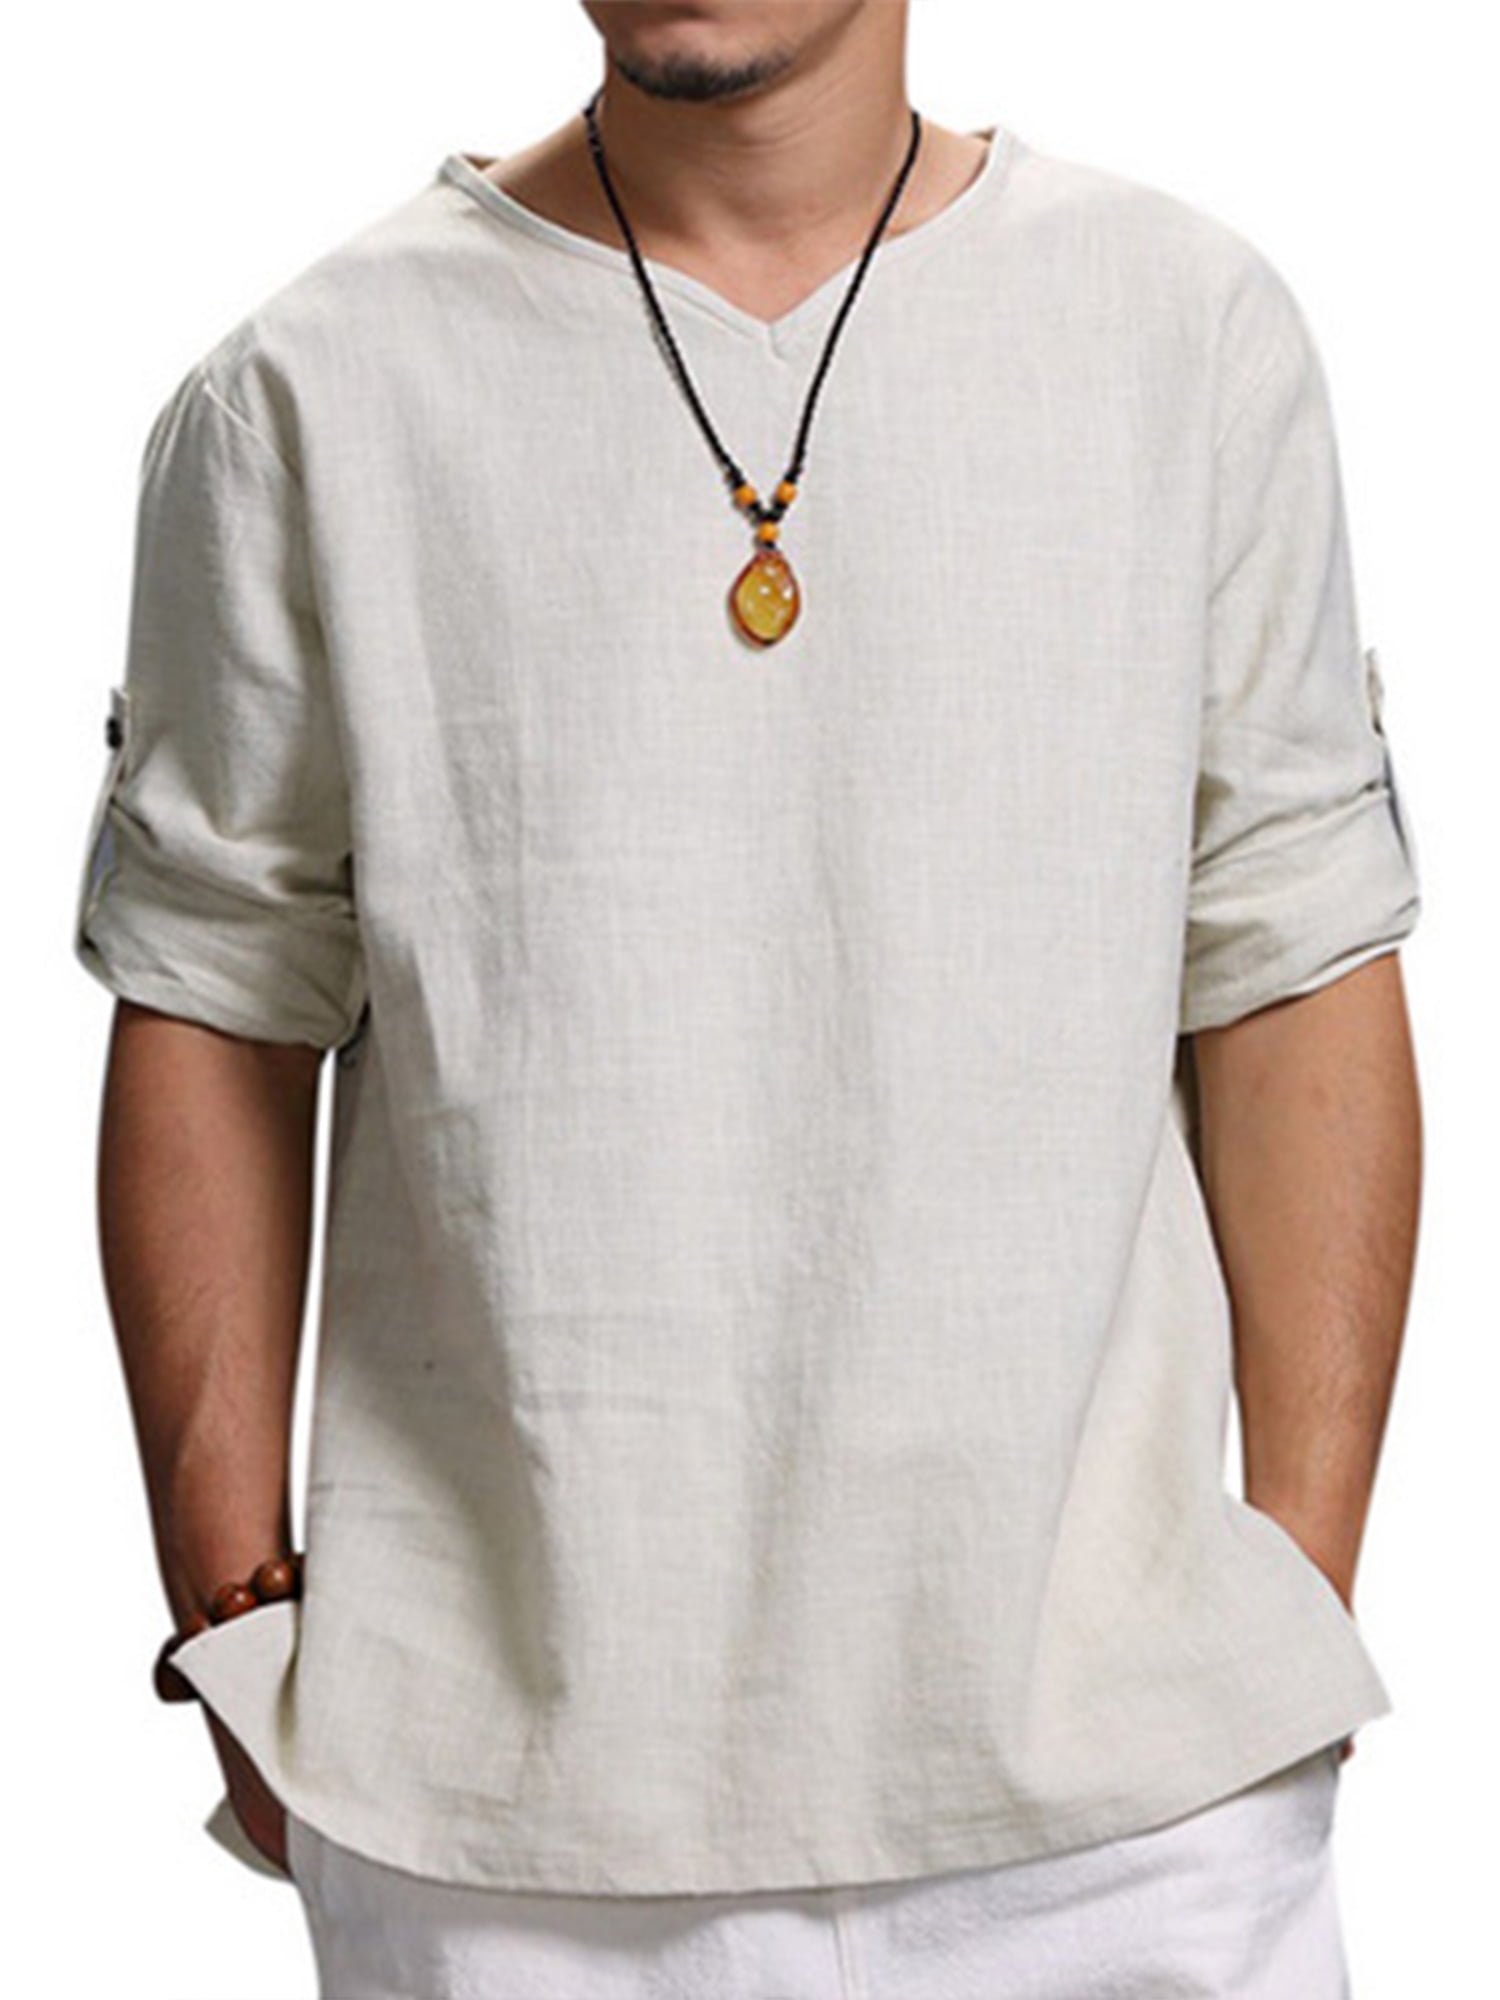 Mens Shirts Linen Tronet Mens Baggy Cotton Linen Solid Color 3/4 Sleeve V Neck T Shirts Tops Blouses 